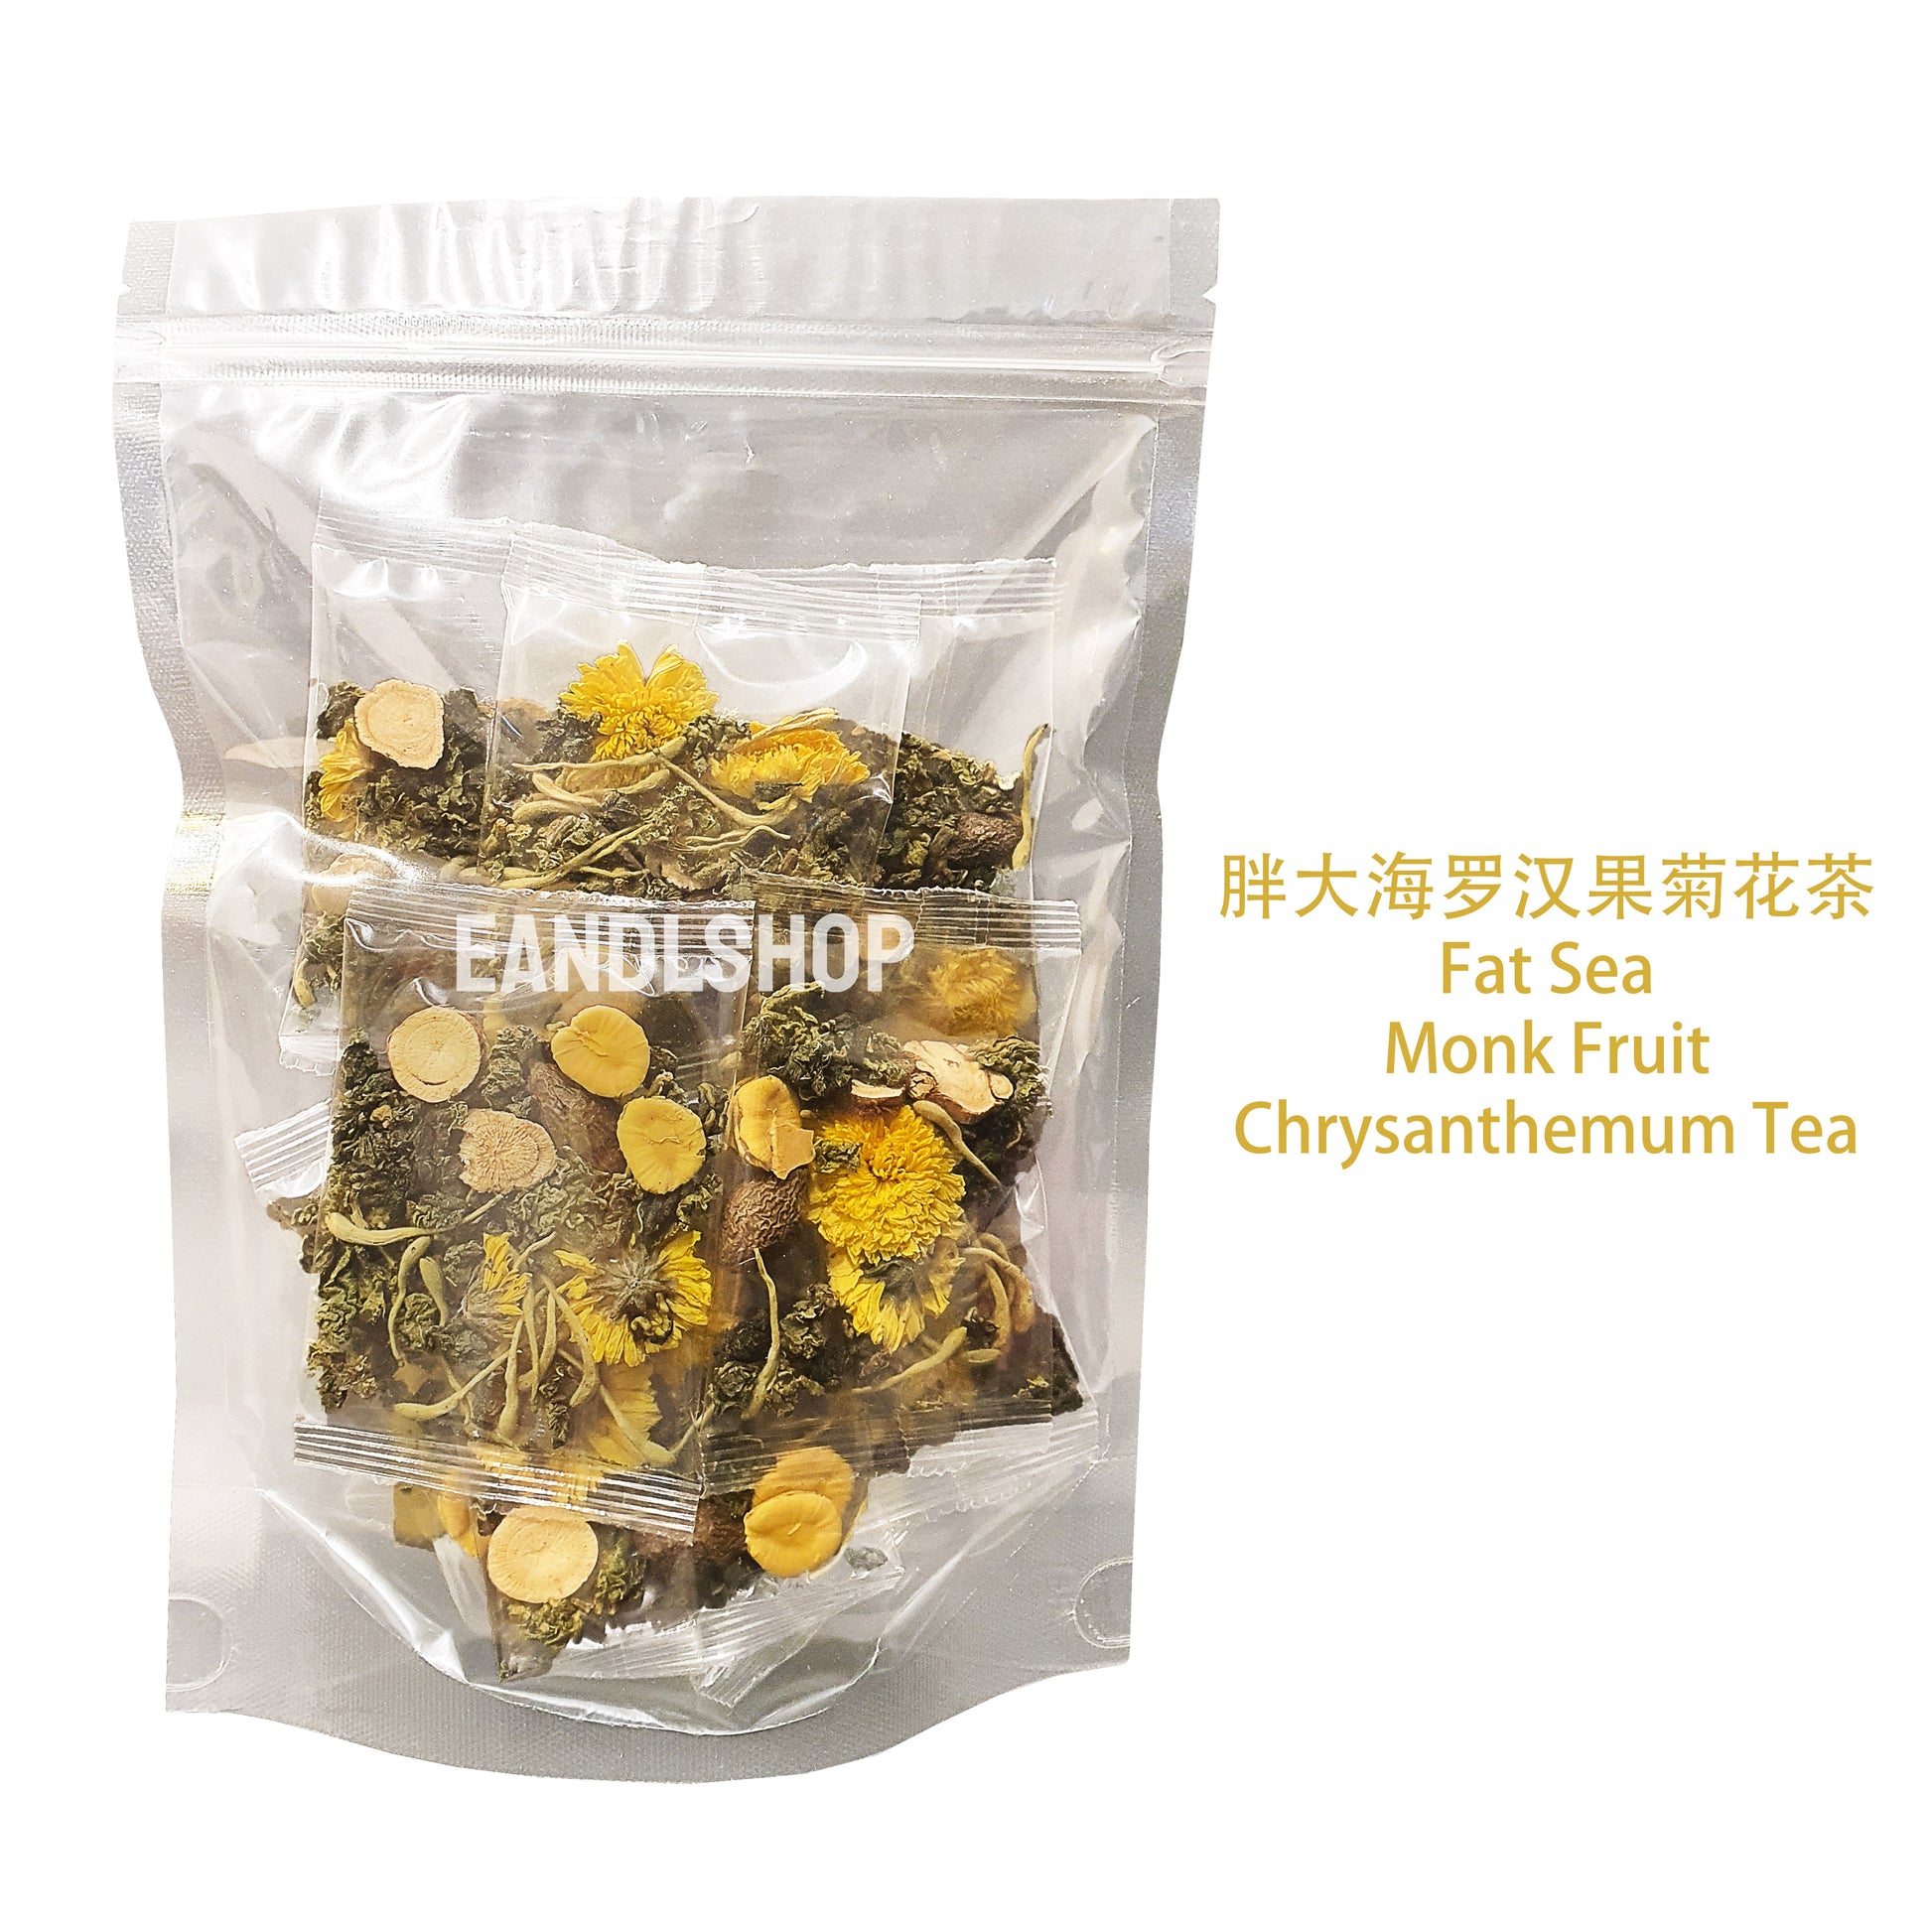 Fat Sea Monk Fruit Chrysanthemum Tea. Old-school biscuits, modern snacks (chips, crackers), cakes, gummies, plums, dried fruits, nuts, herbal tea – available at www.EANDLSHOP.com